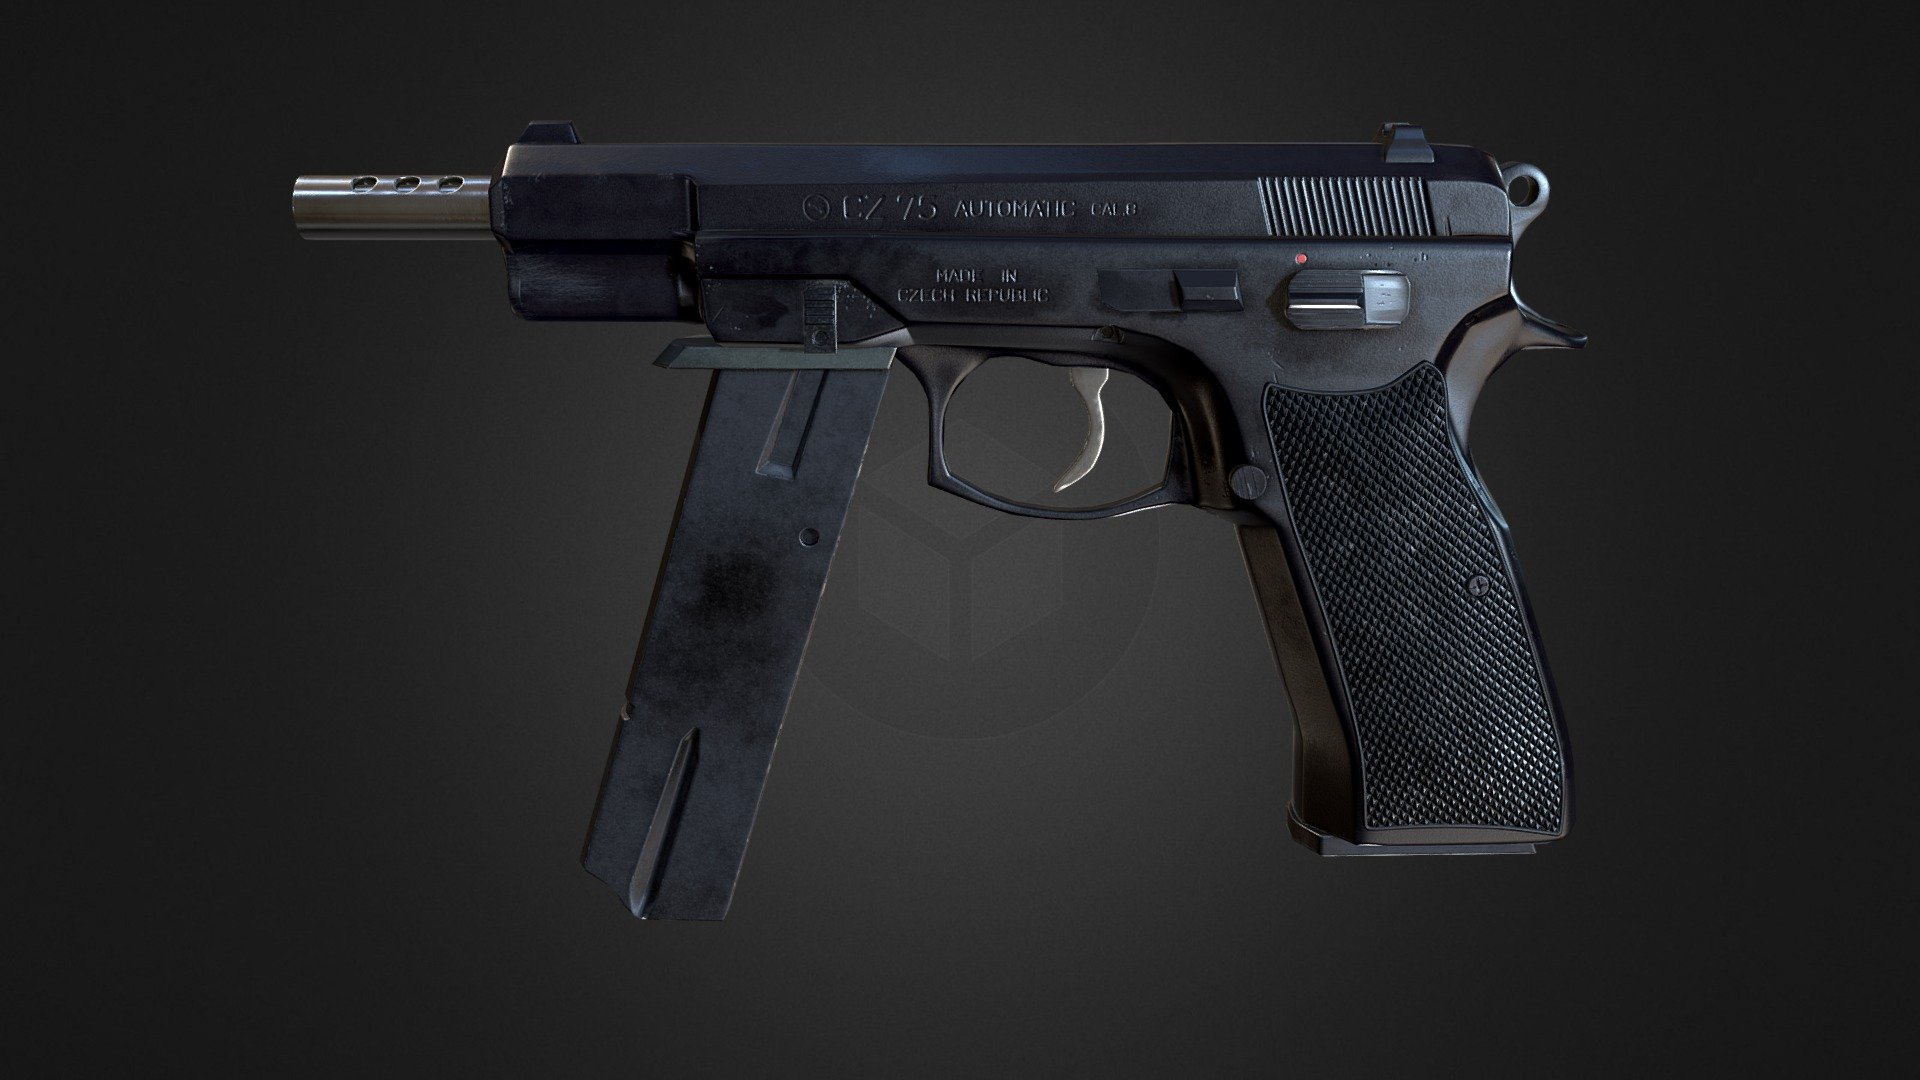 CZ75 Automatic Pistol